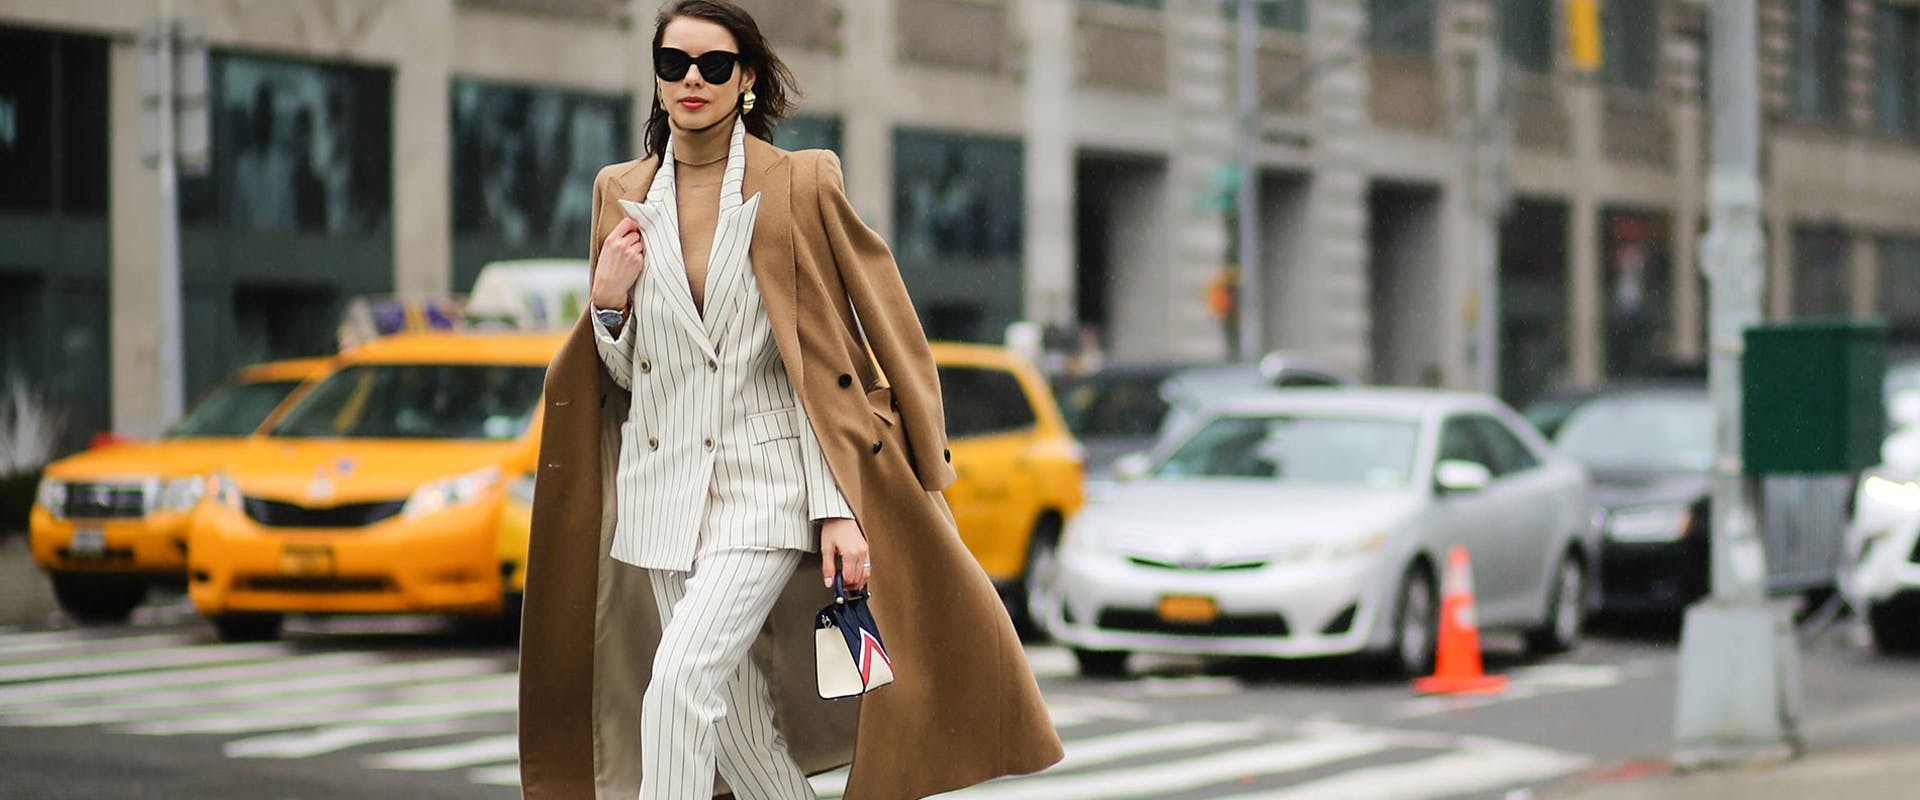 clothing transportation car coat accessories sunglasses overcoat female person wheel